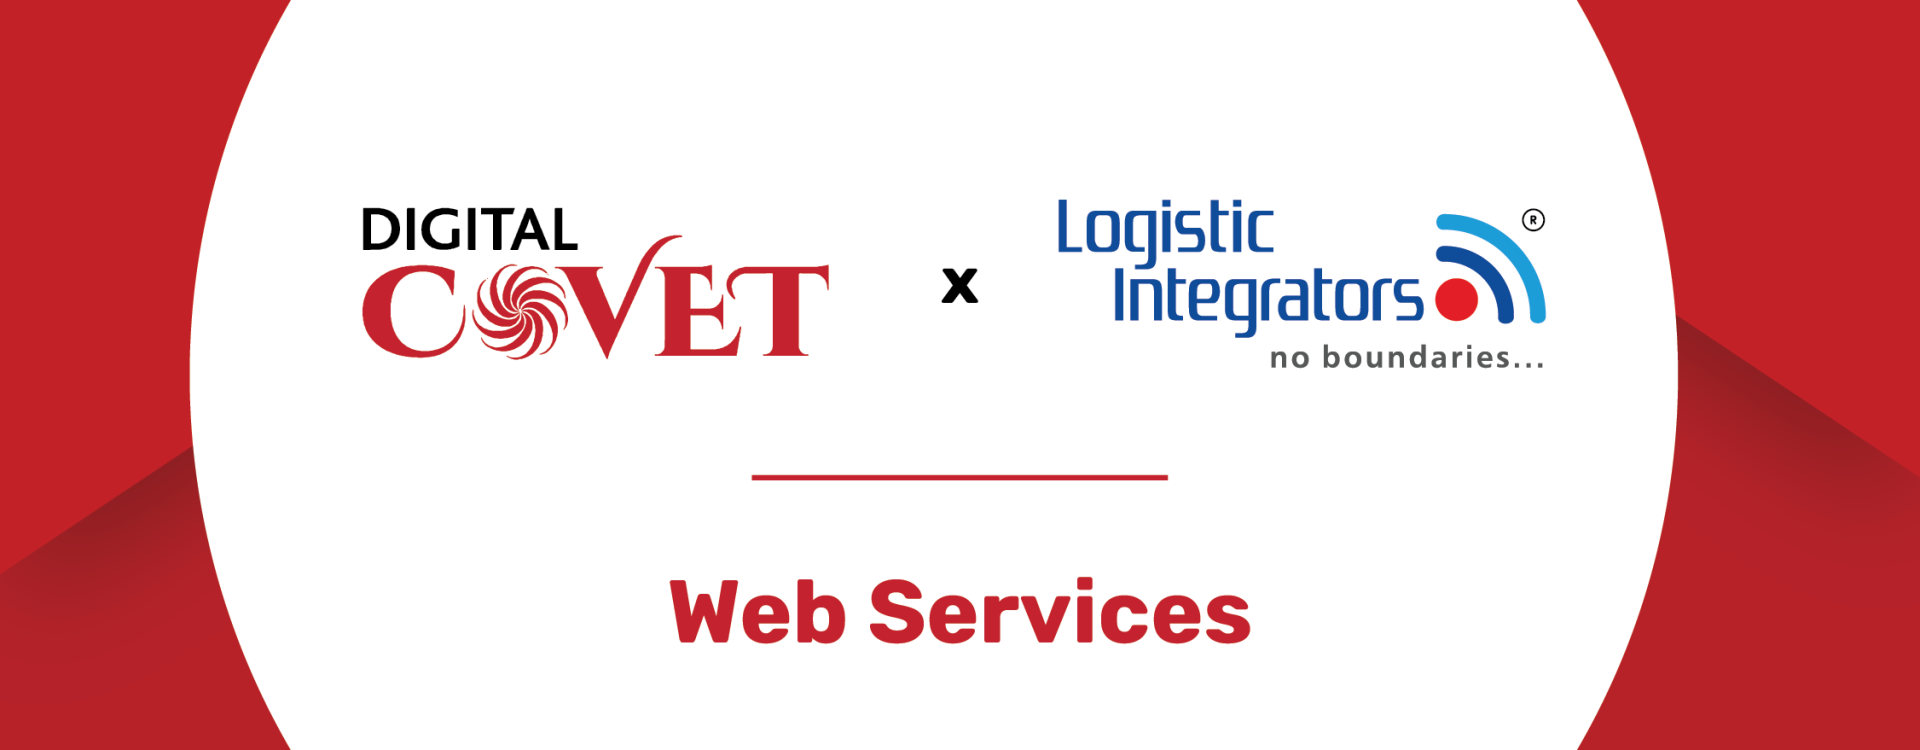 Digital Covet Revamps Logistic Integrators' Website